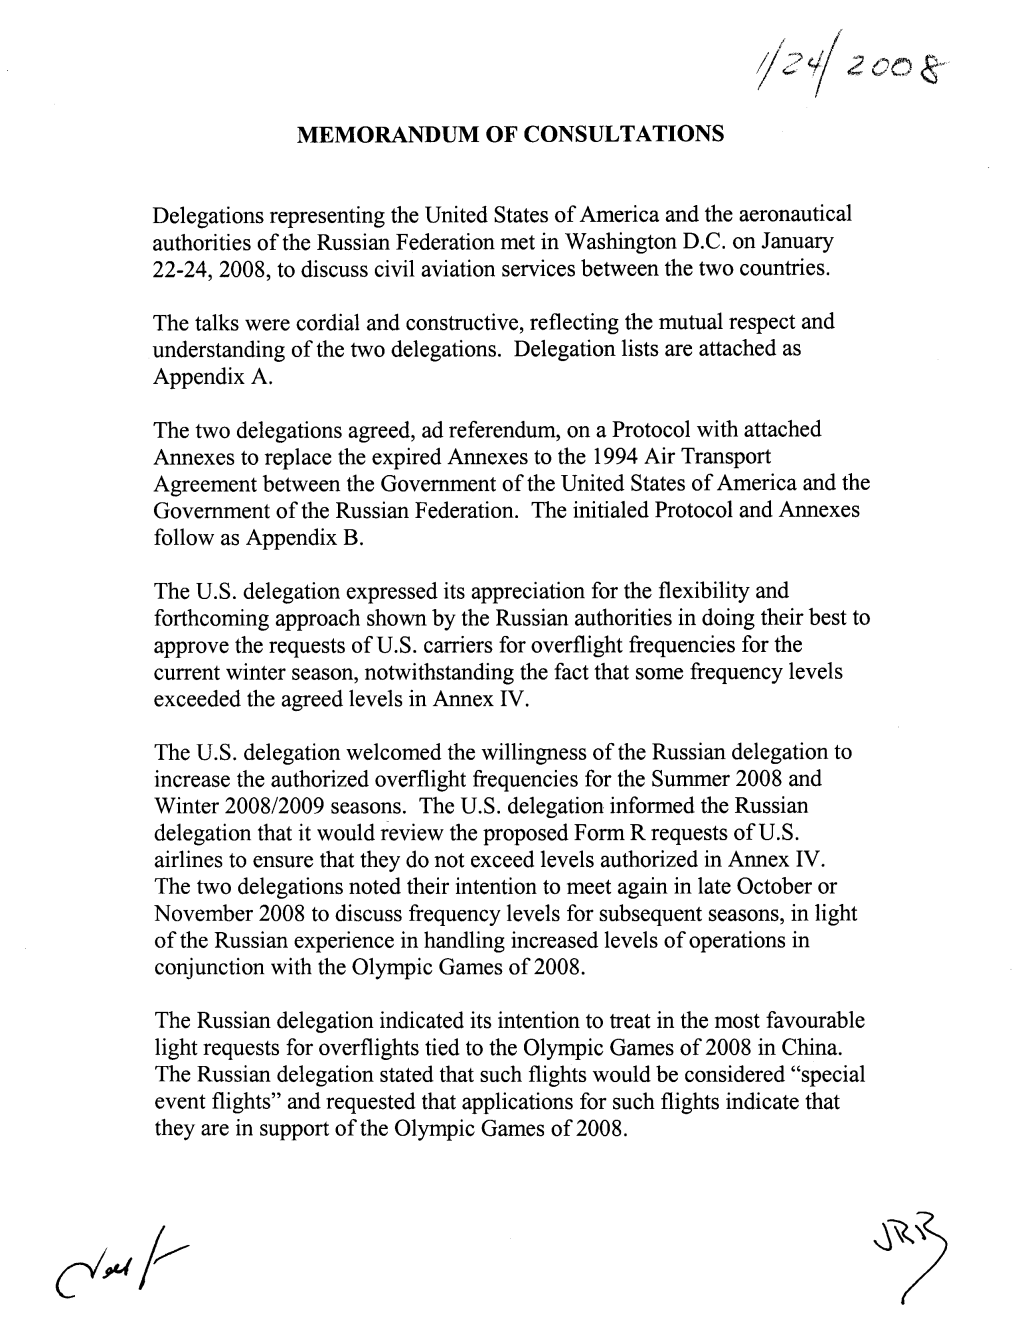 U.S.-Russia Memorandum of Consultations of January 24, 2008